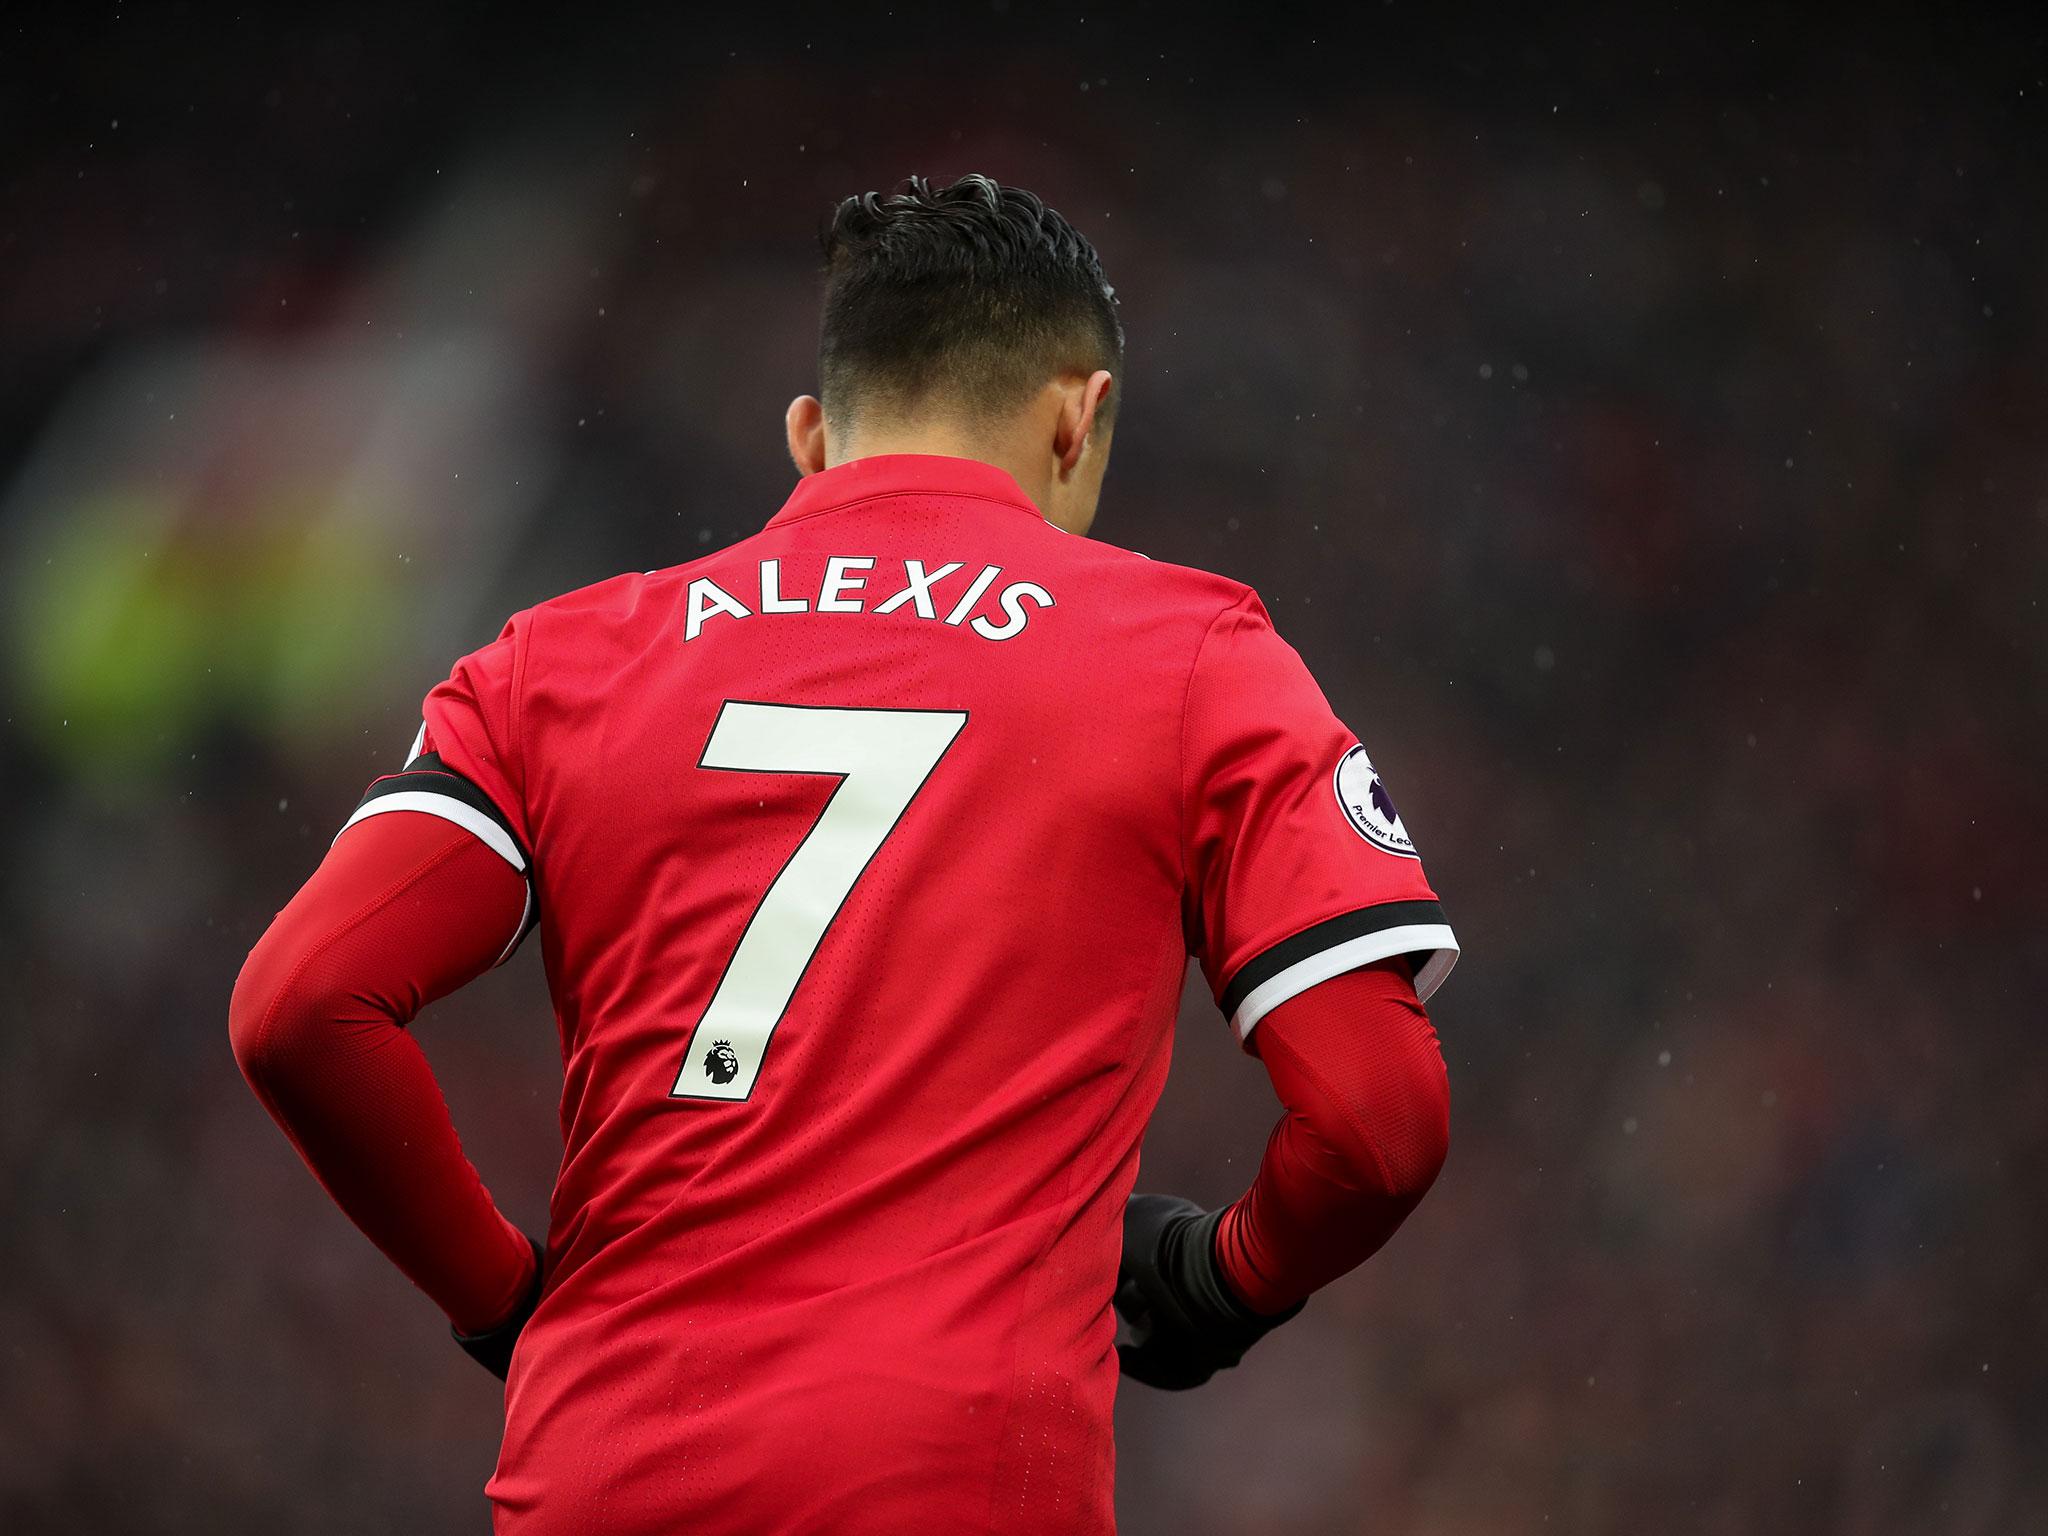 Alexis Sanchez signed for Manchester United last month